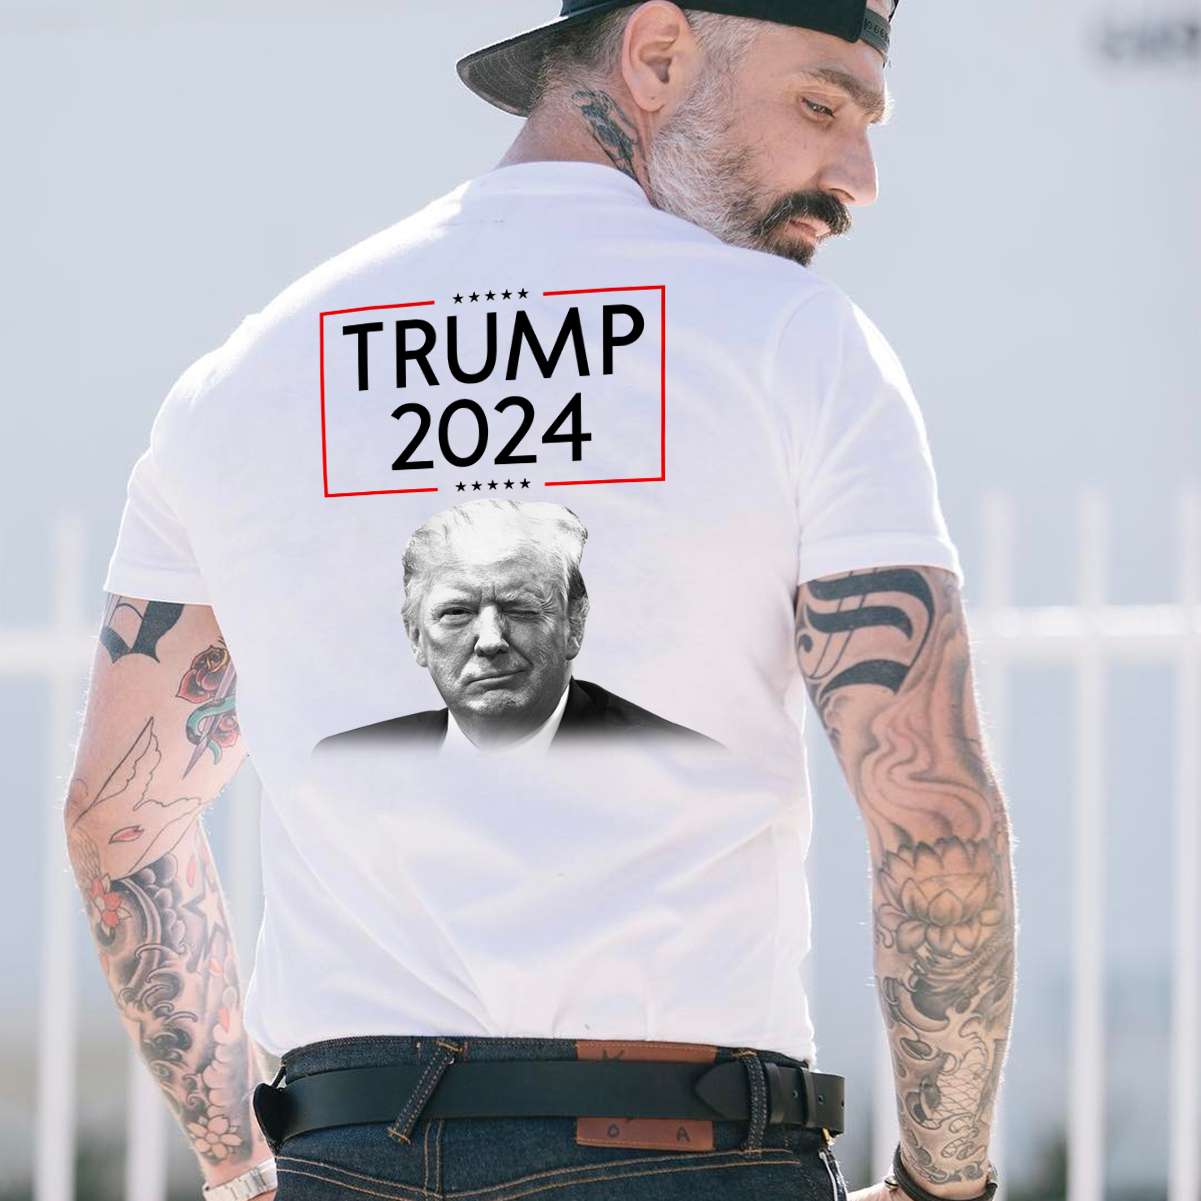 Trump 2024 - Donald Trump, the great America president, make America great again